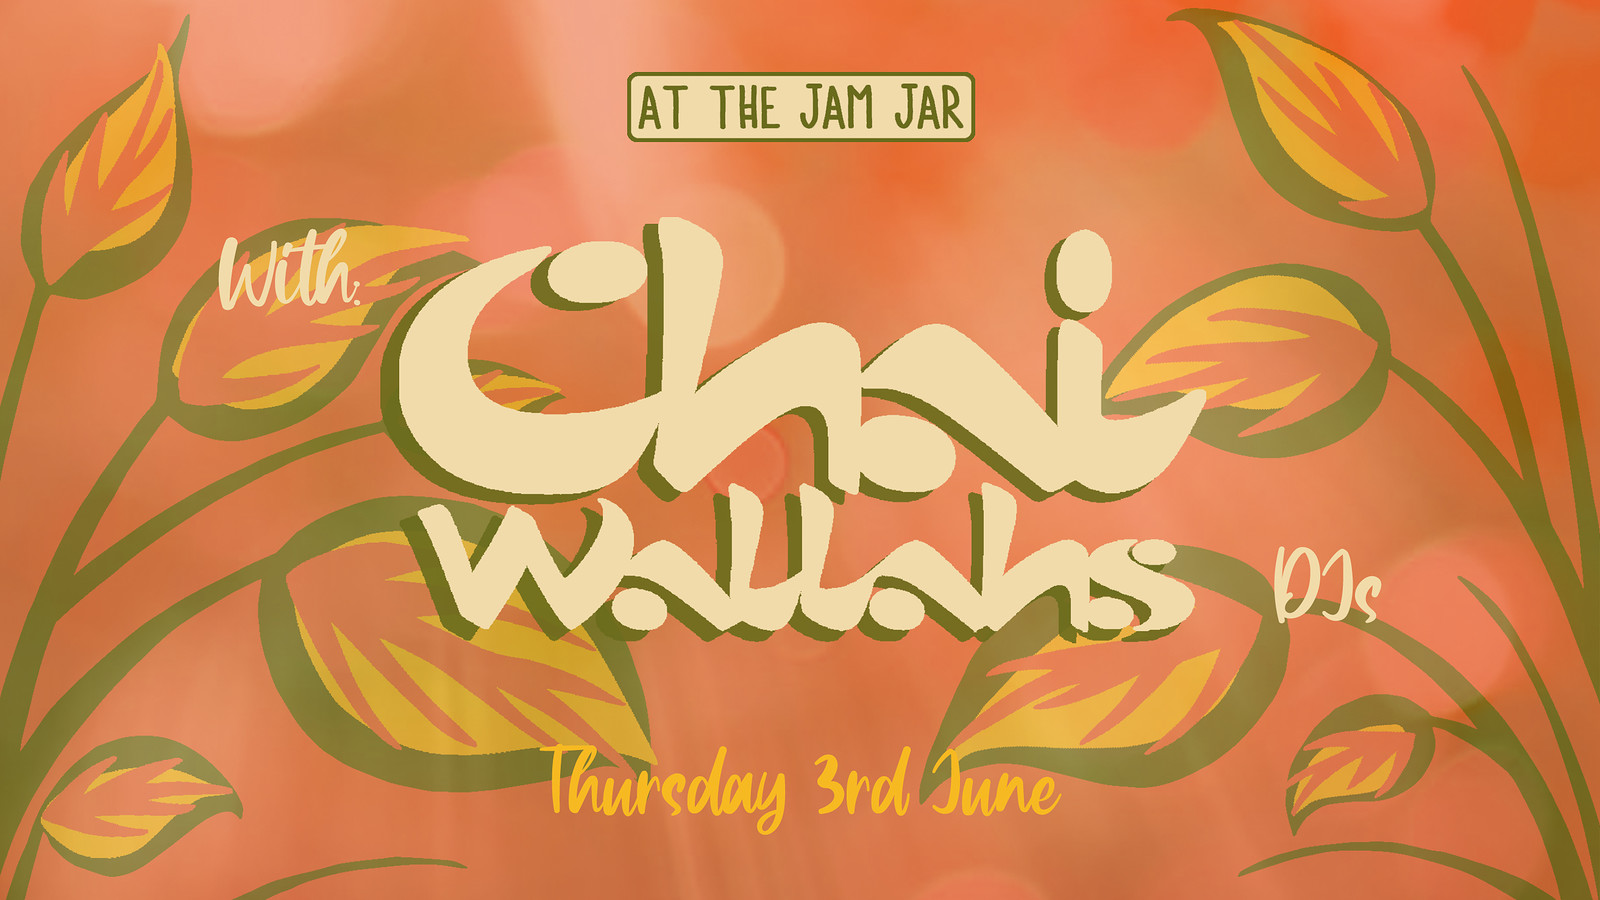 At The Jam Jar with Chai Wallahs DJs at Jam Jar